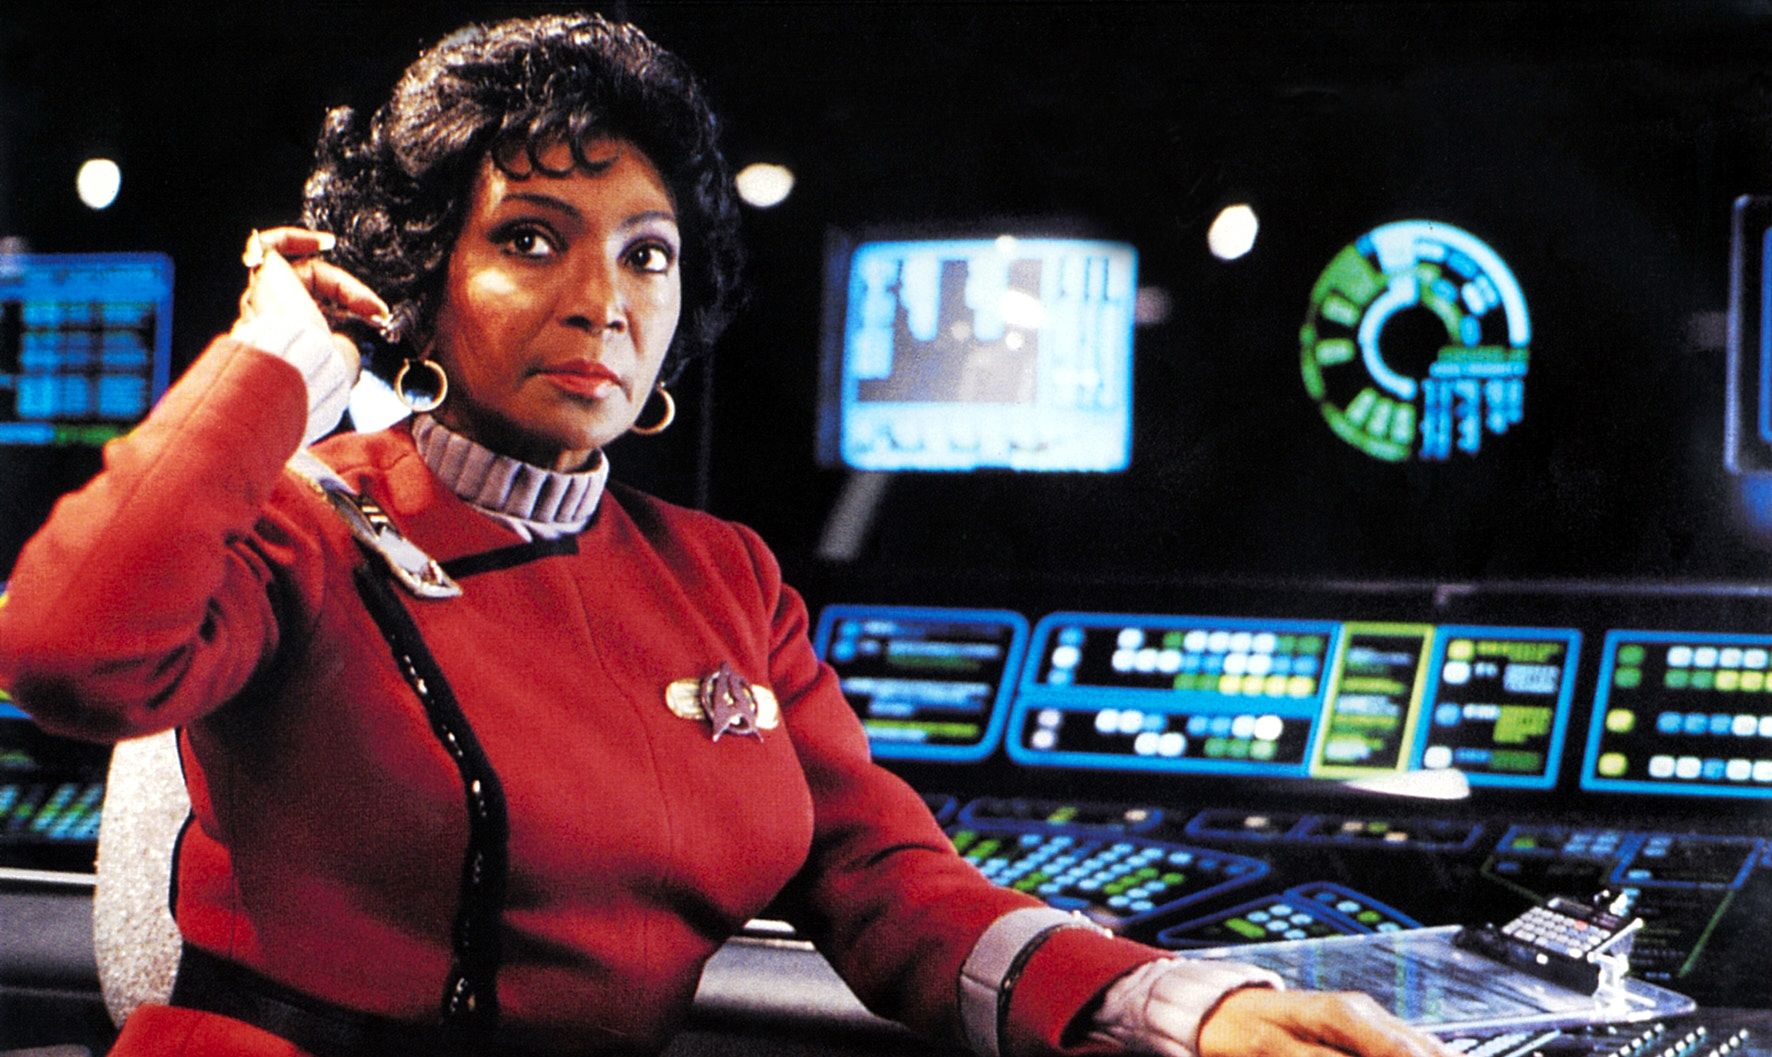 NASA Celebra Nichelle Nichols de 'Star Trek'